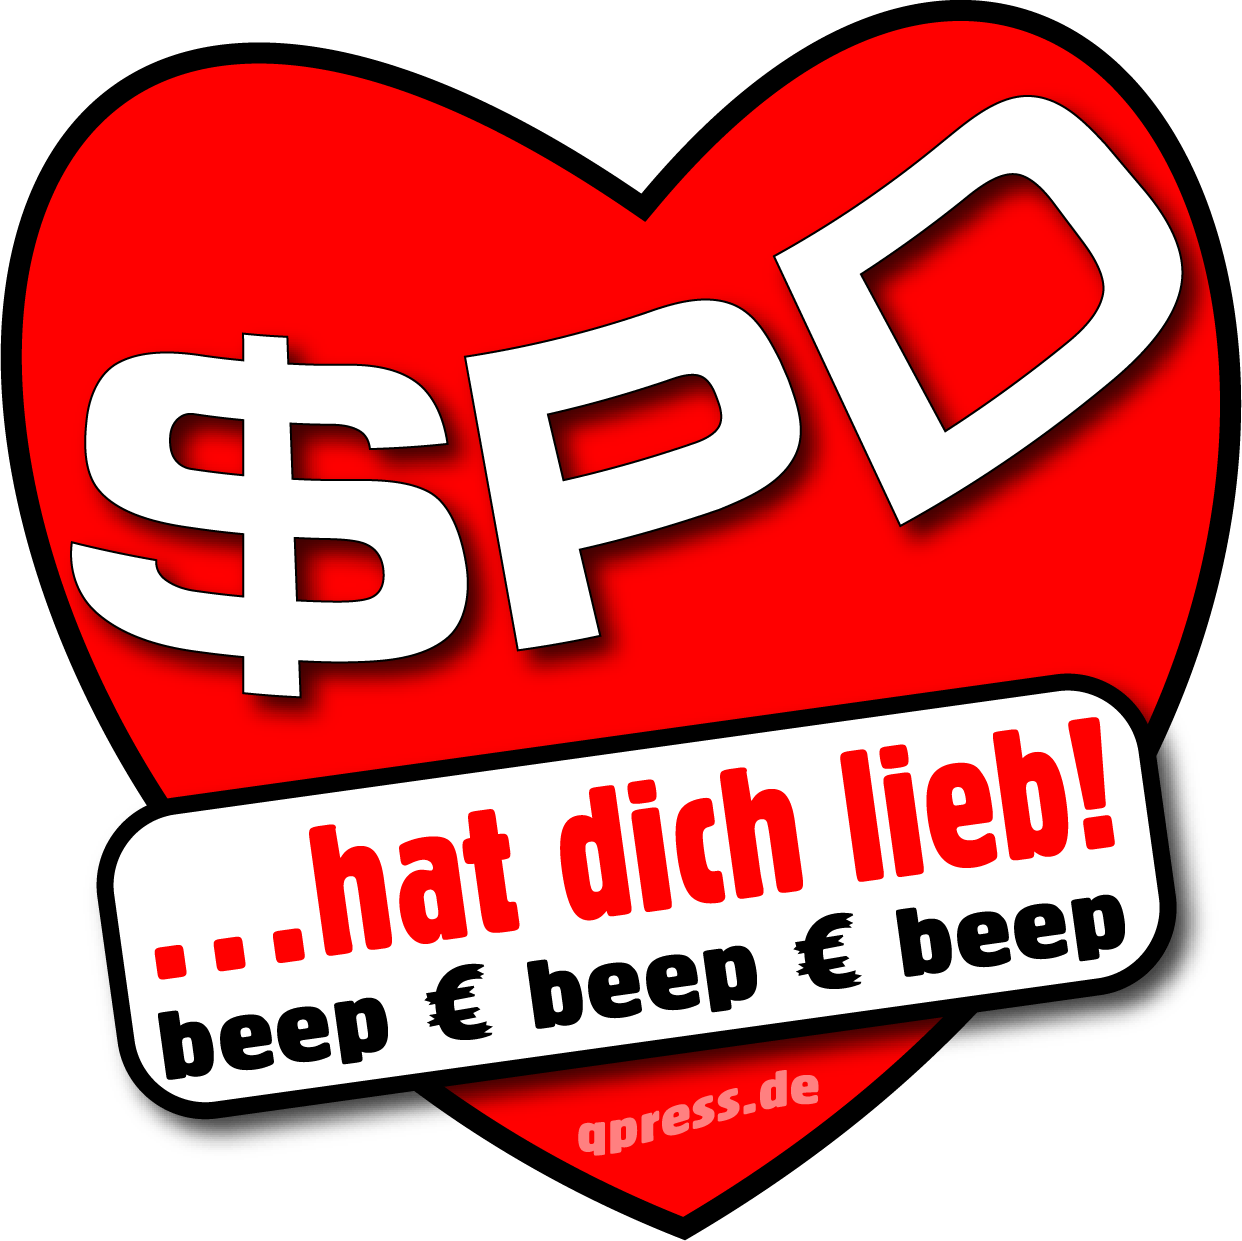 SPD hat dich lieb beep